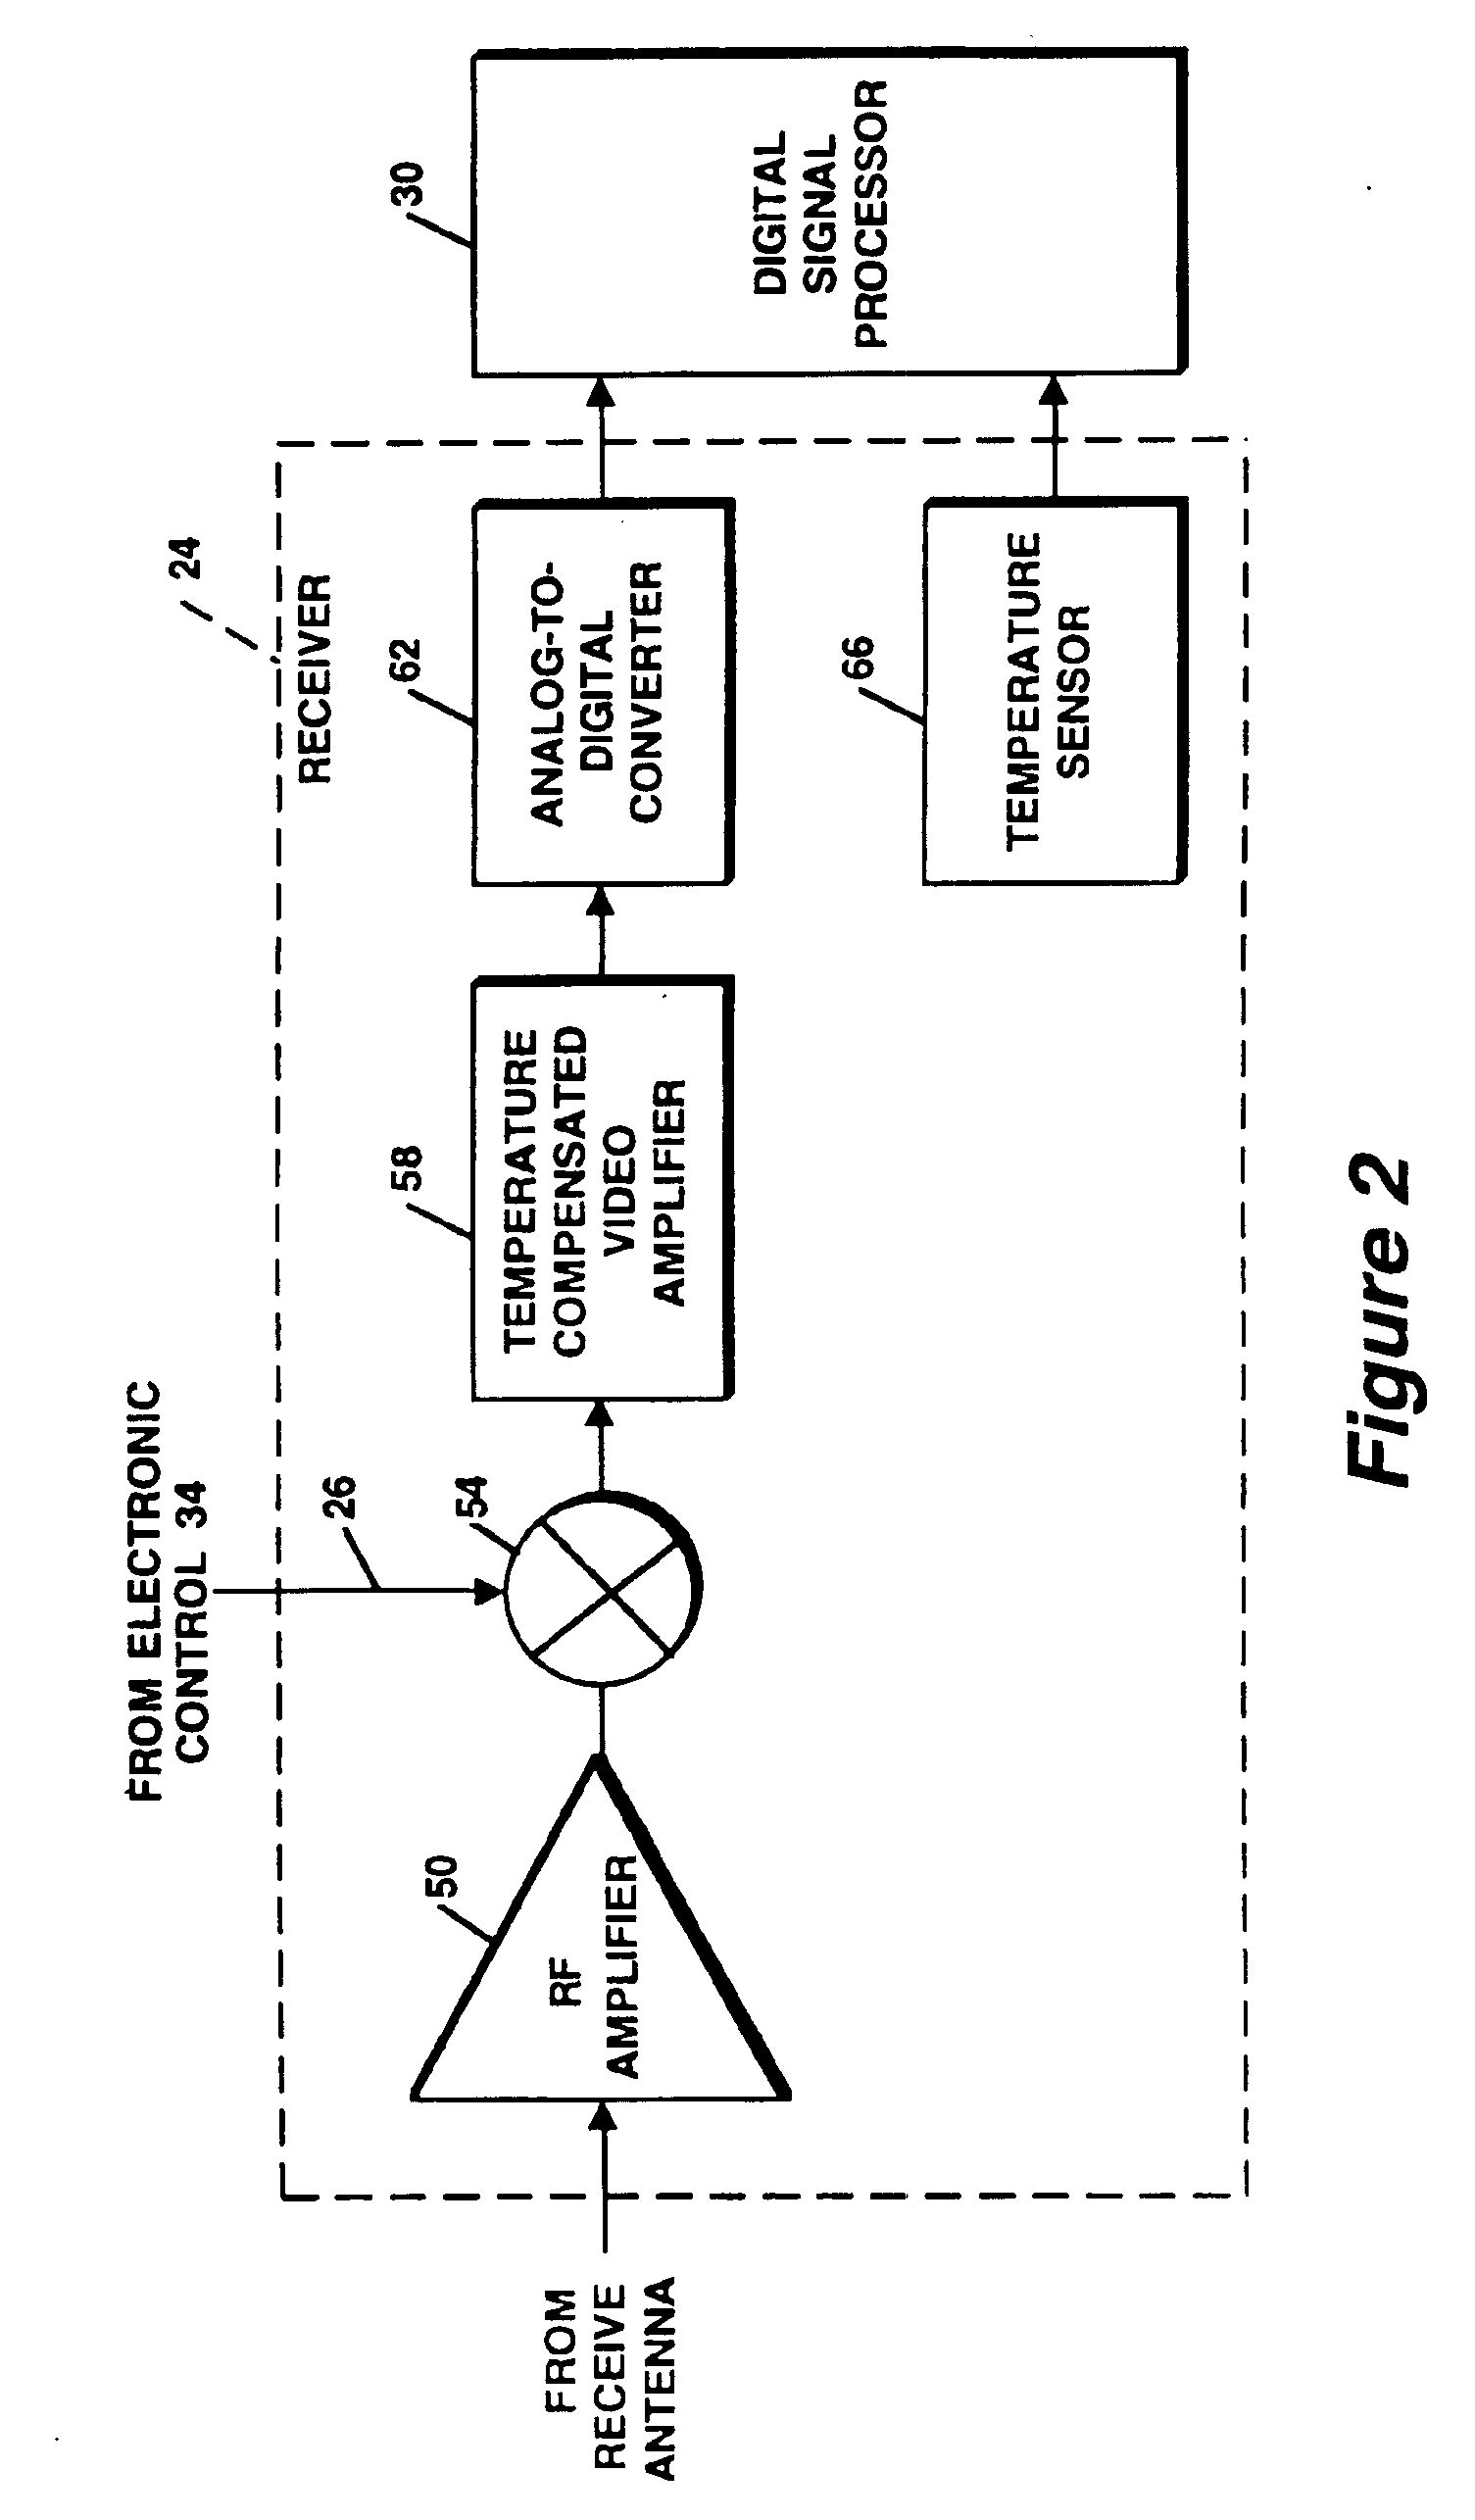 Video amplifier for a radar receiver